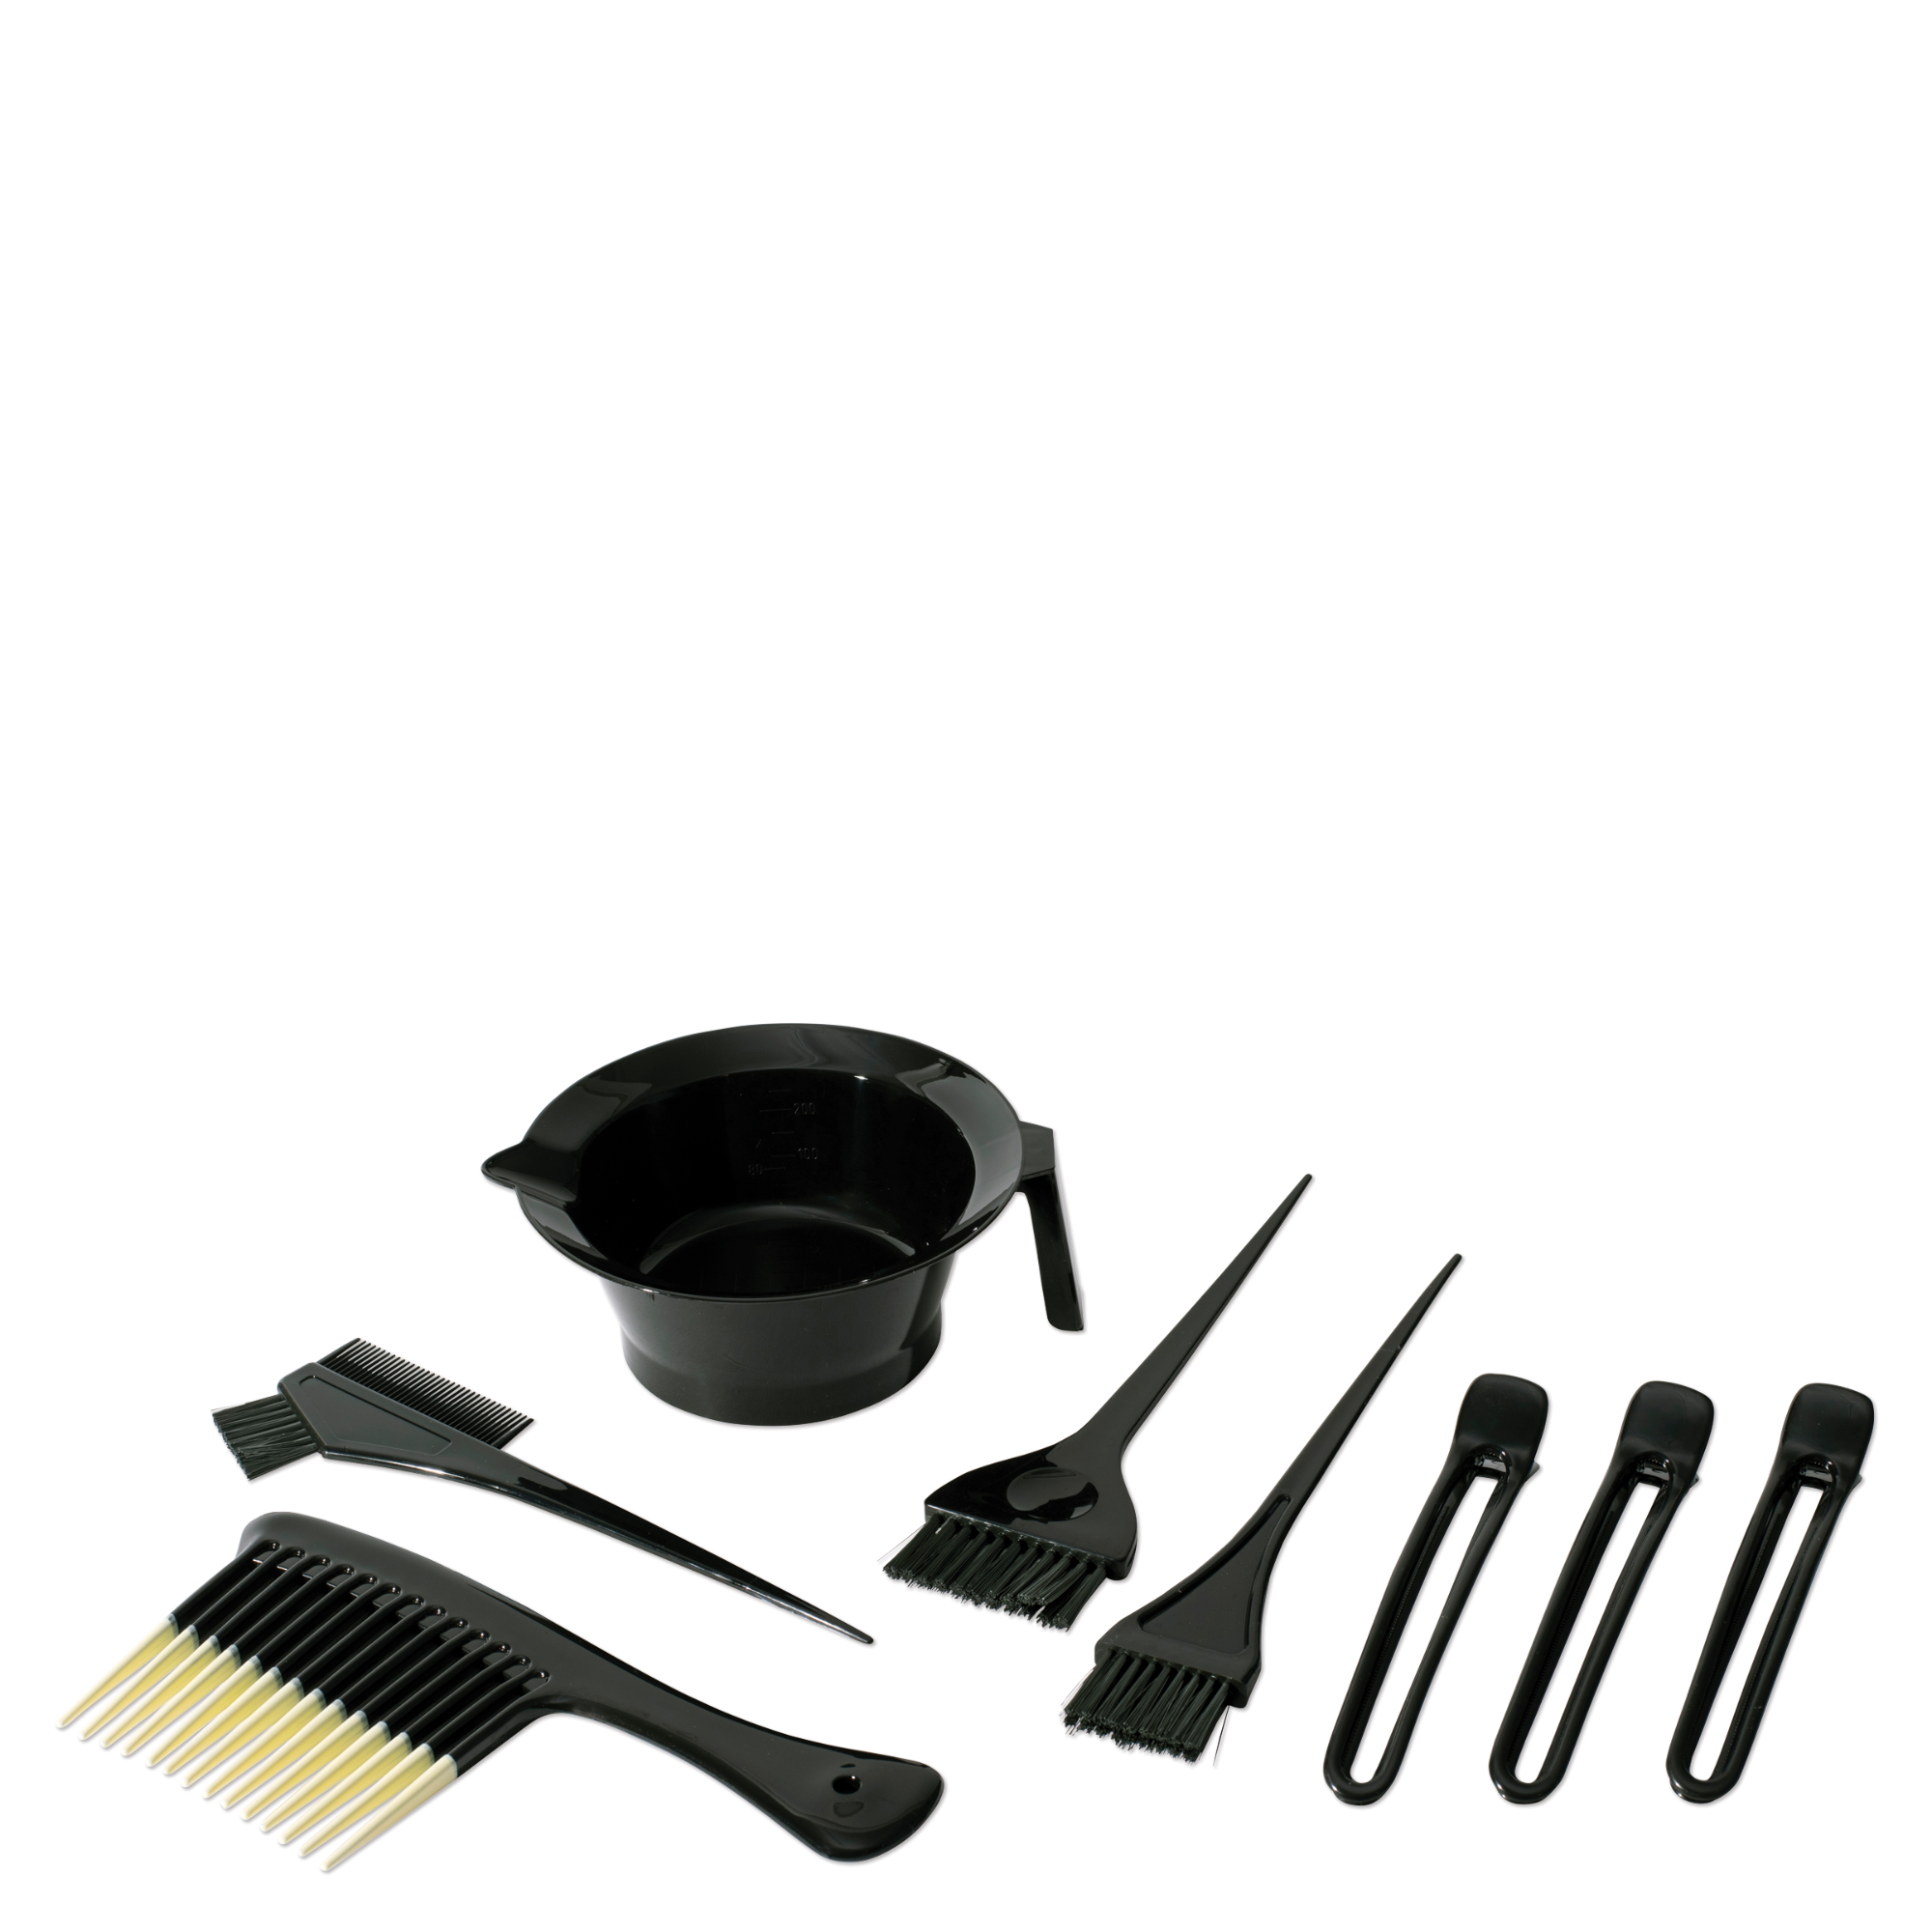 Hair Colorist Tool Kit - 9 pc.